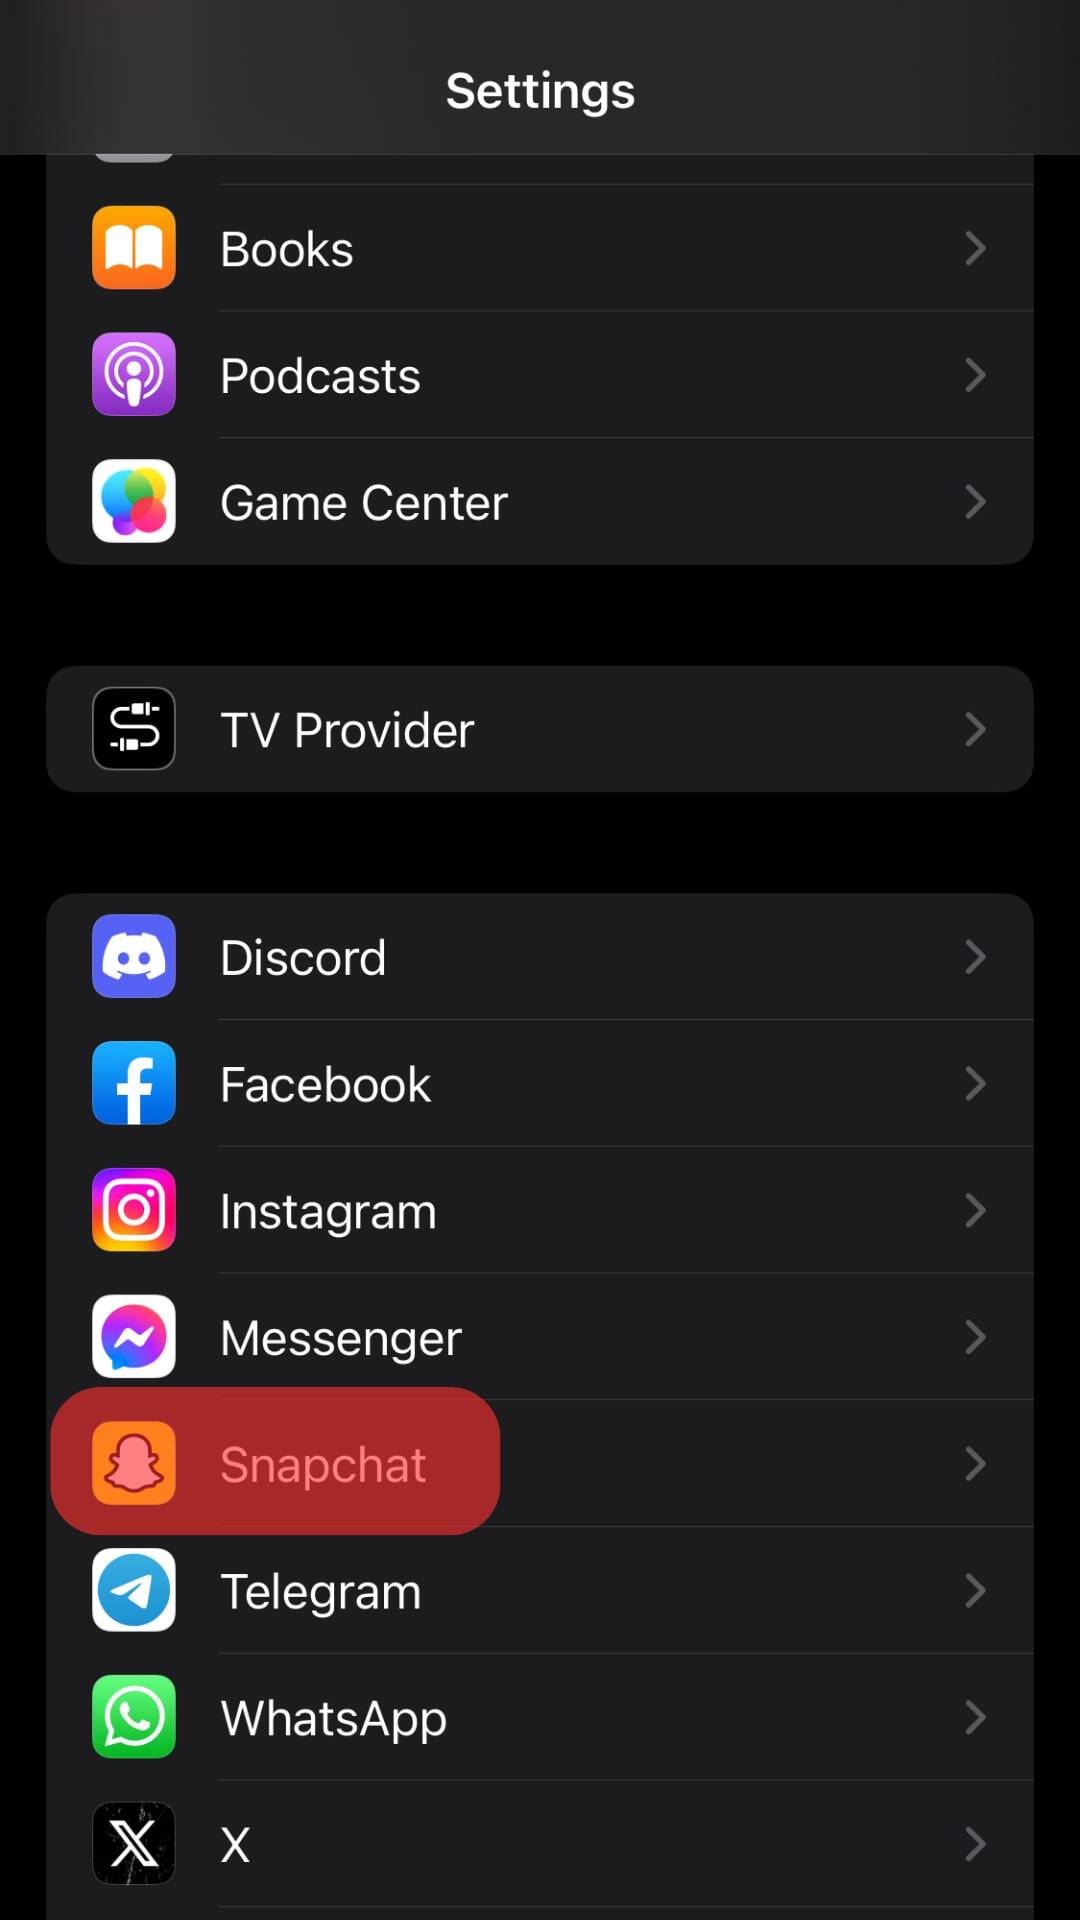 Scroll Down And Select Snapchat.